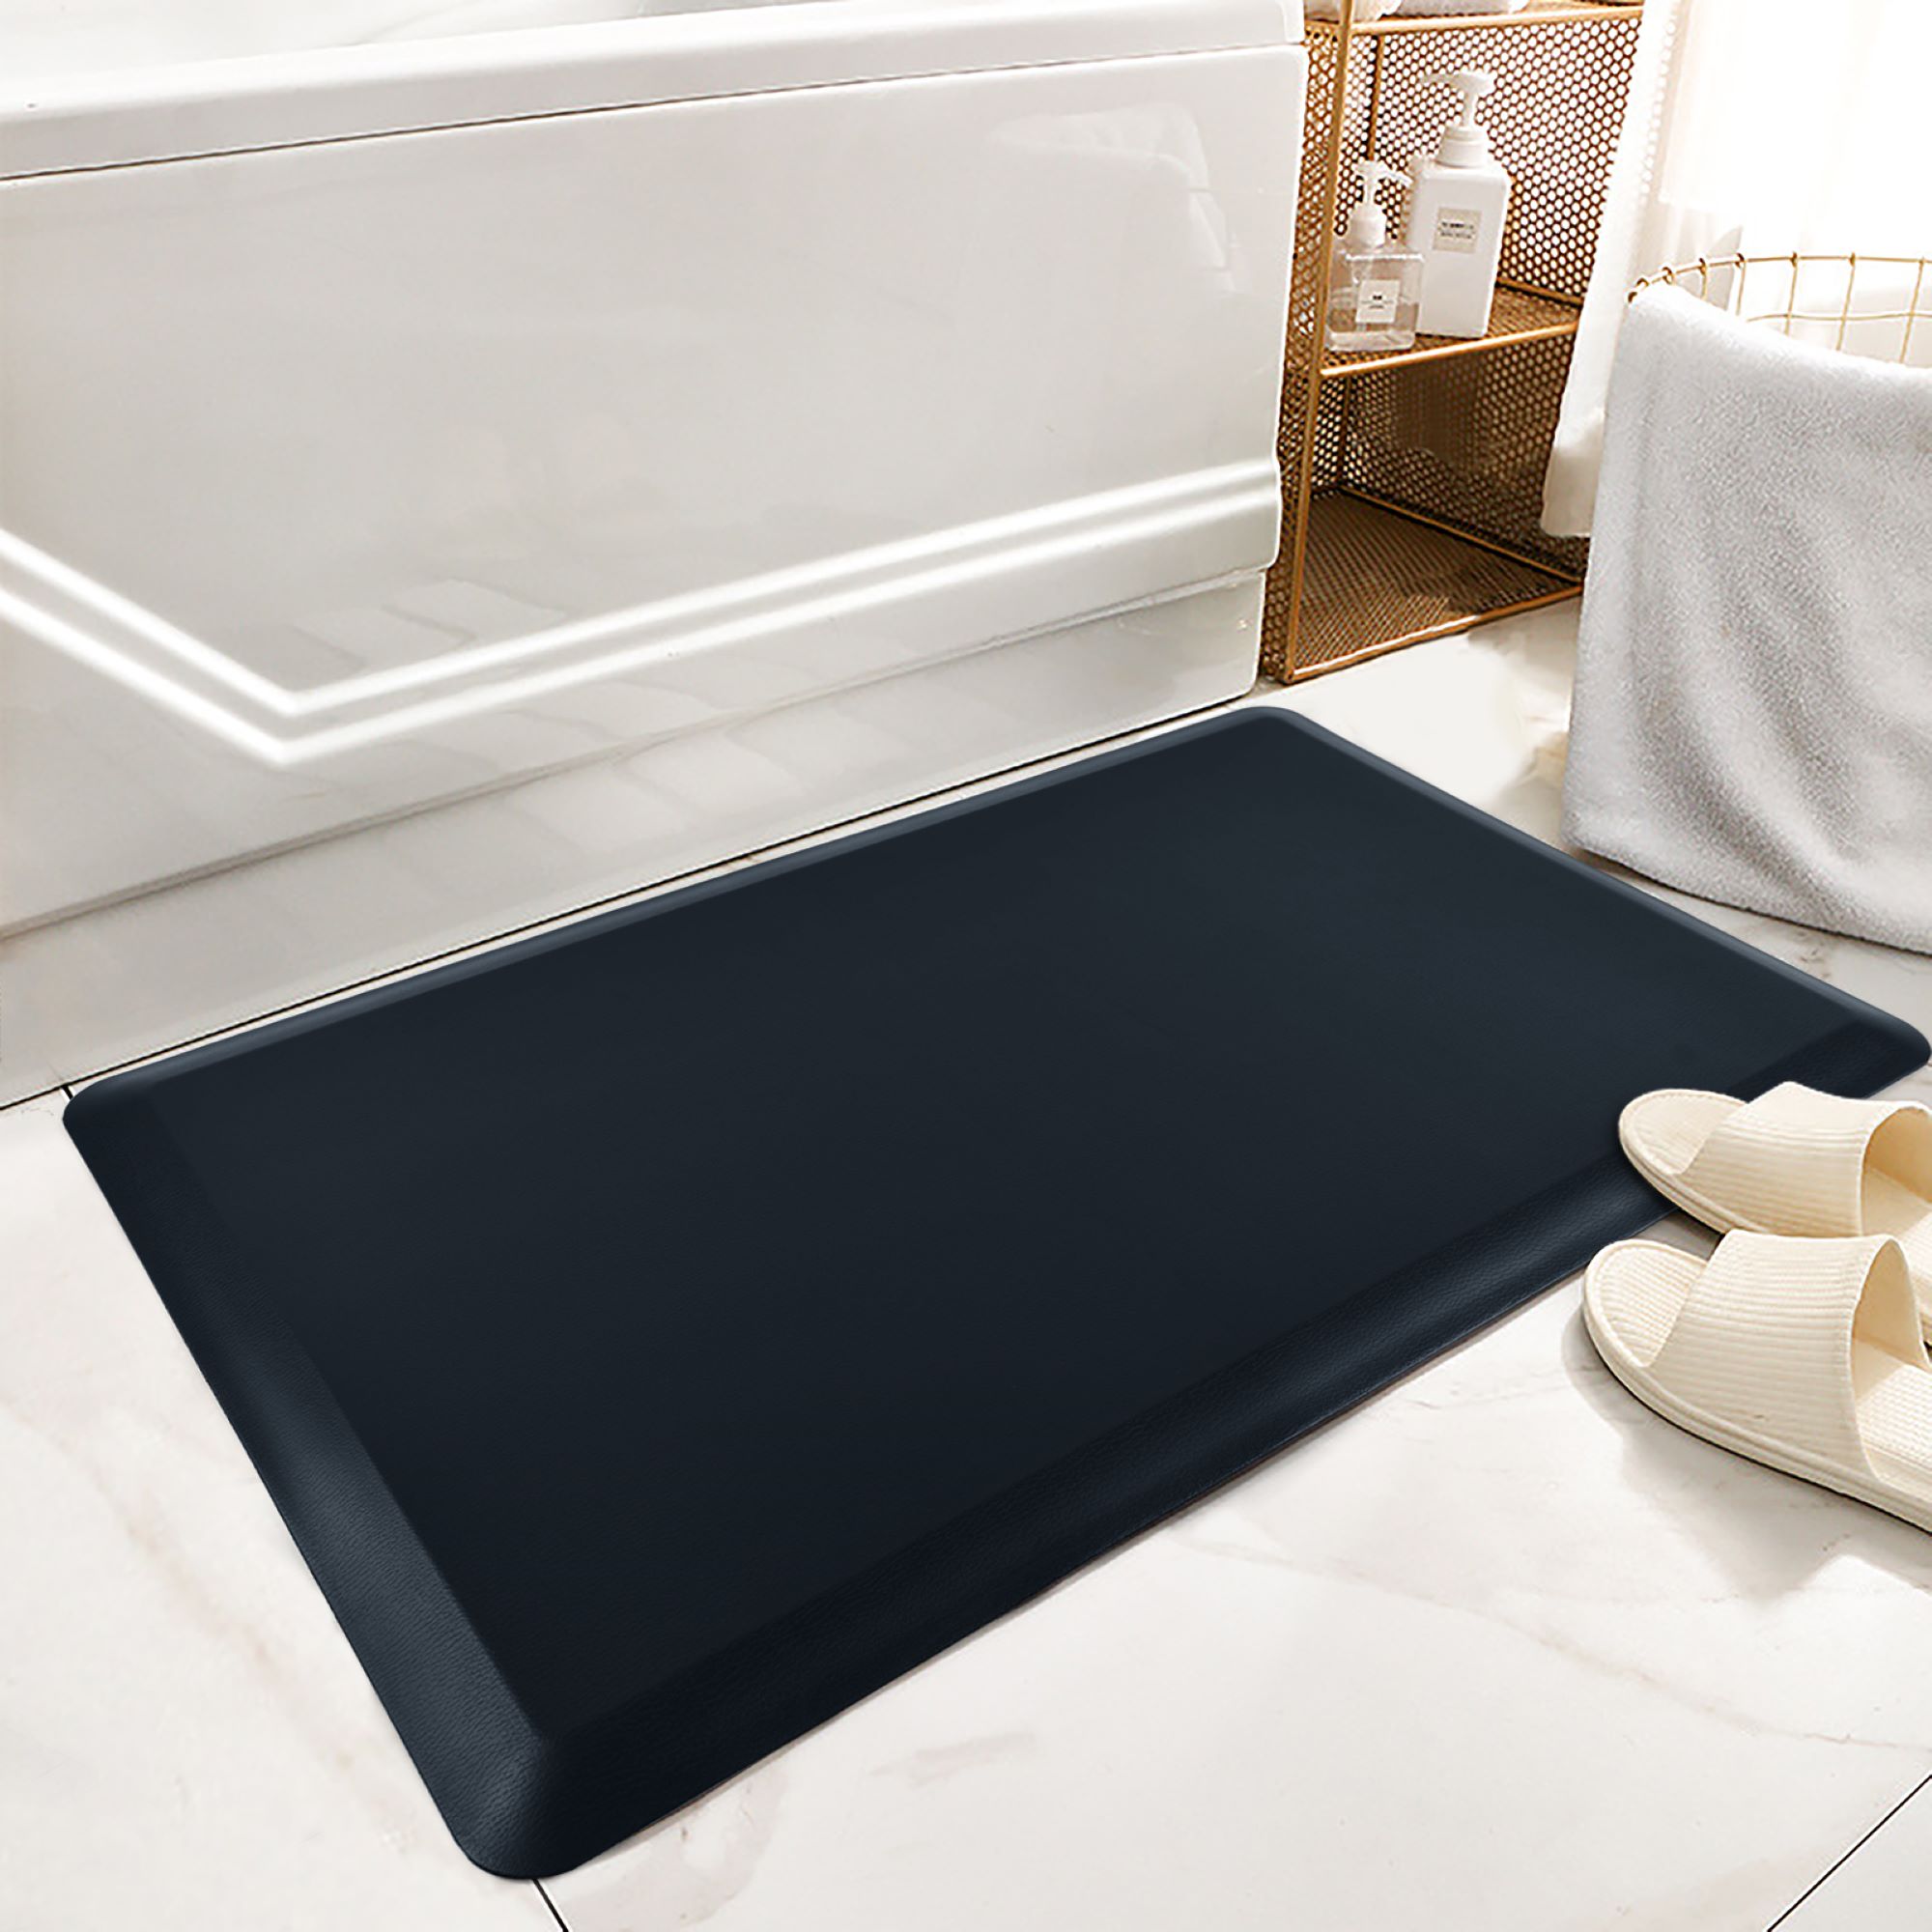 Y12001BB-Art3d Anti Fatigue Mat - 1/2 Inch Cushioned Kitchen Mat - Non Slip  Foam Comfort Cushion for Standing Desk, Office or Garage Floor (17.3x28,  Black Blue)